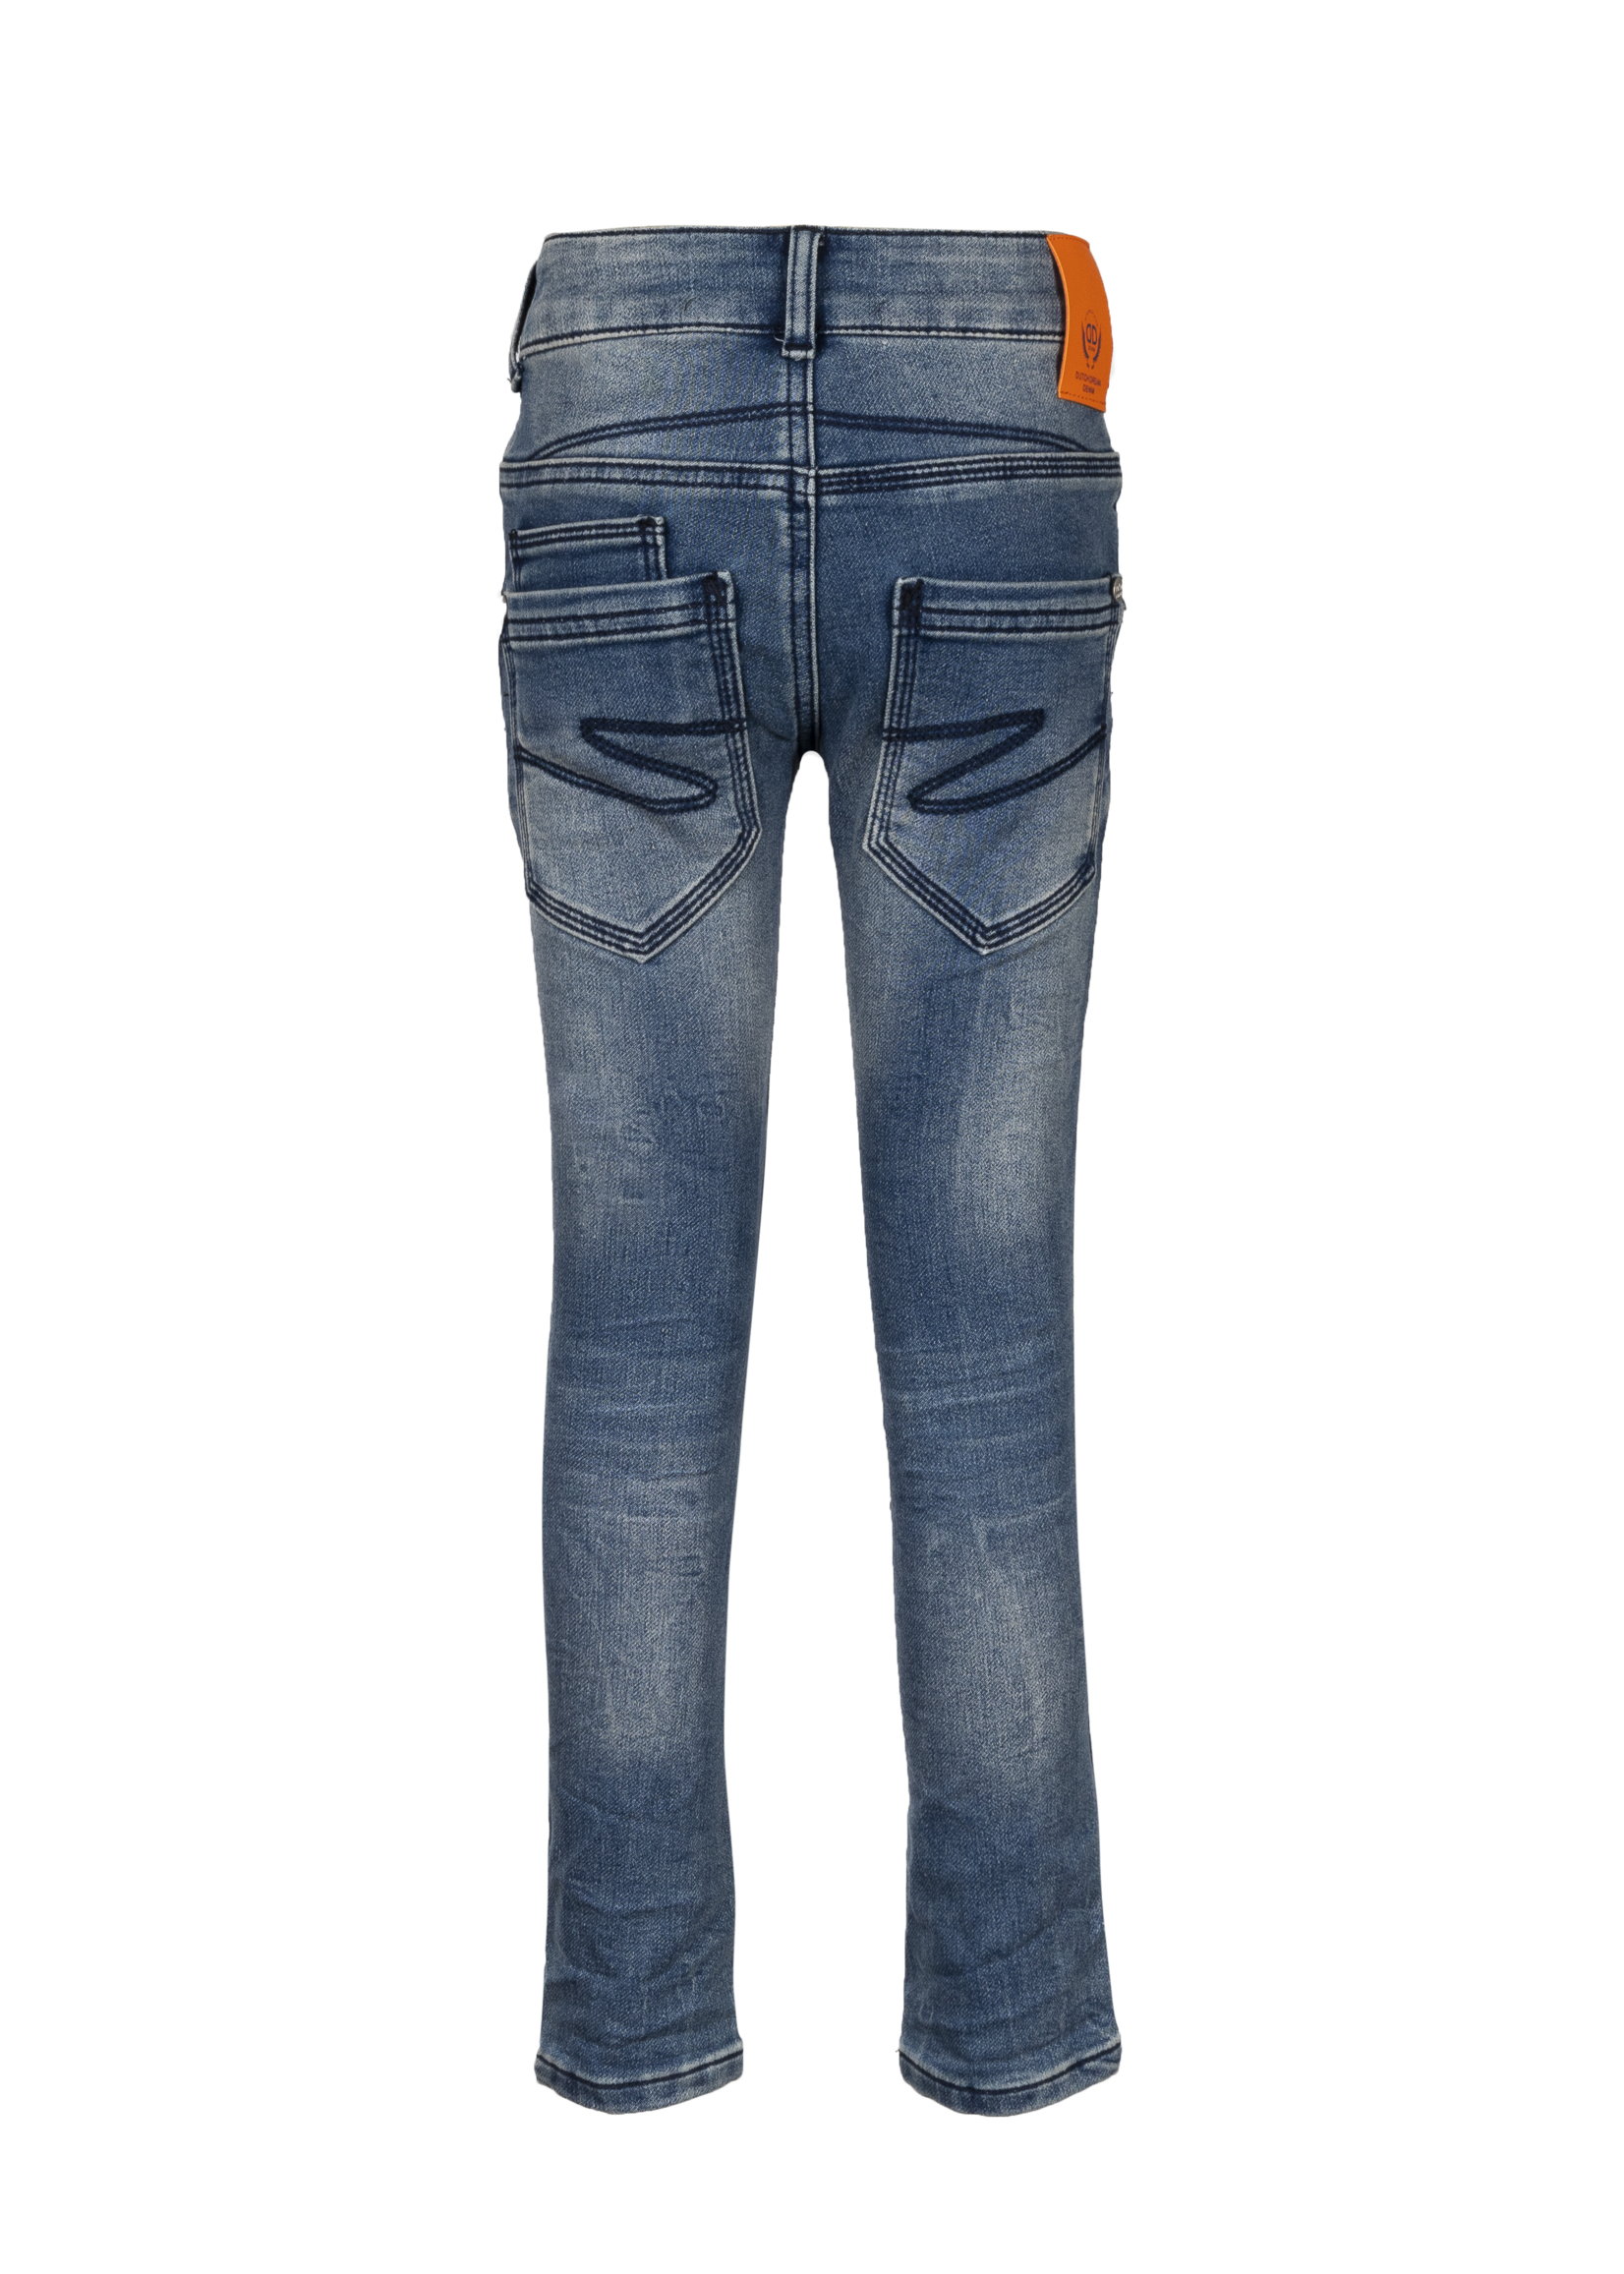 Dutch dream denim ZILE, EXTRA SLIM FIT Jogg jeans met dubbele laag stof op de knieën